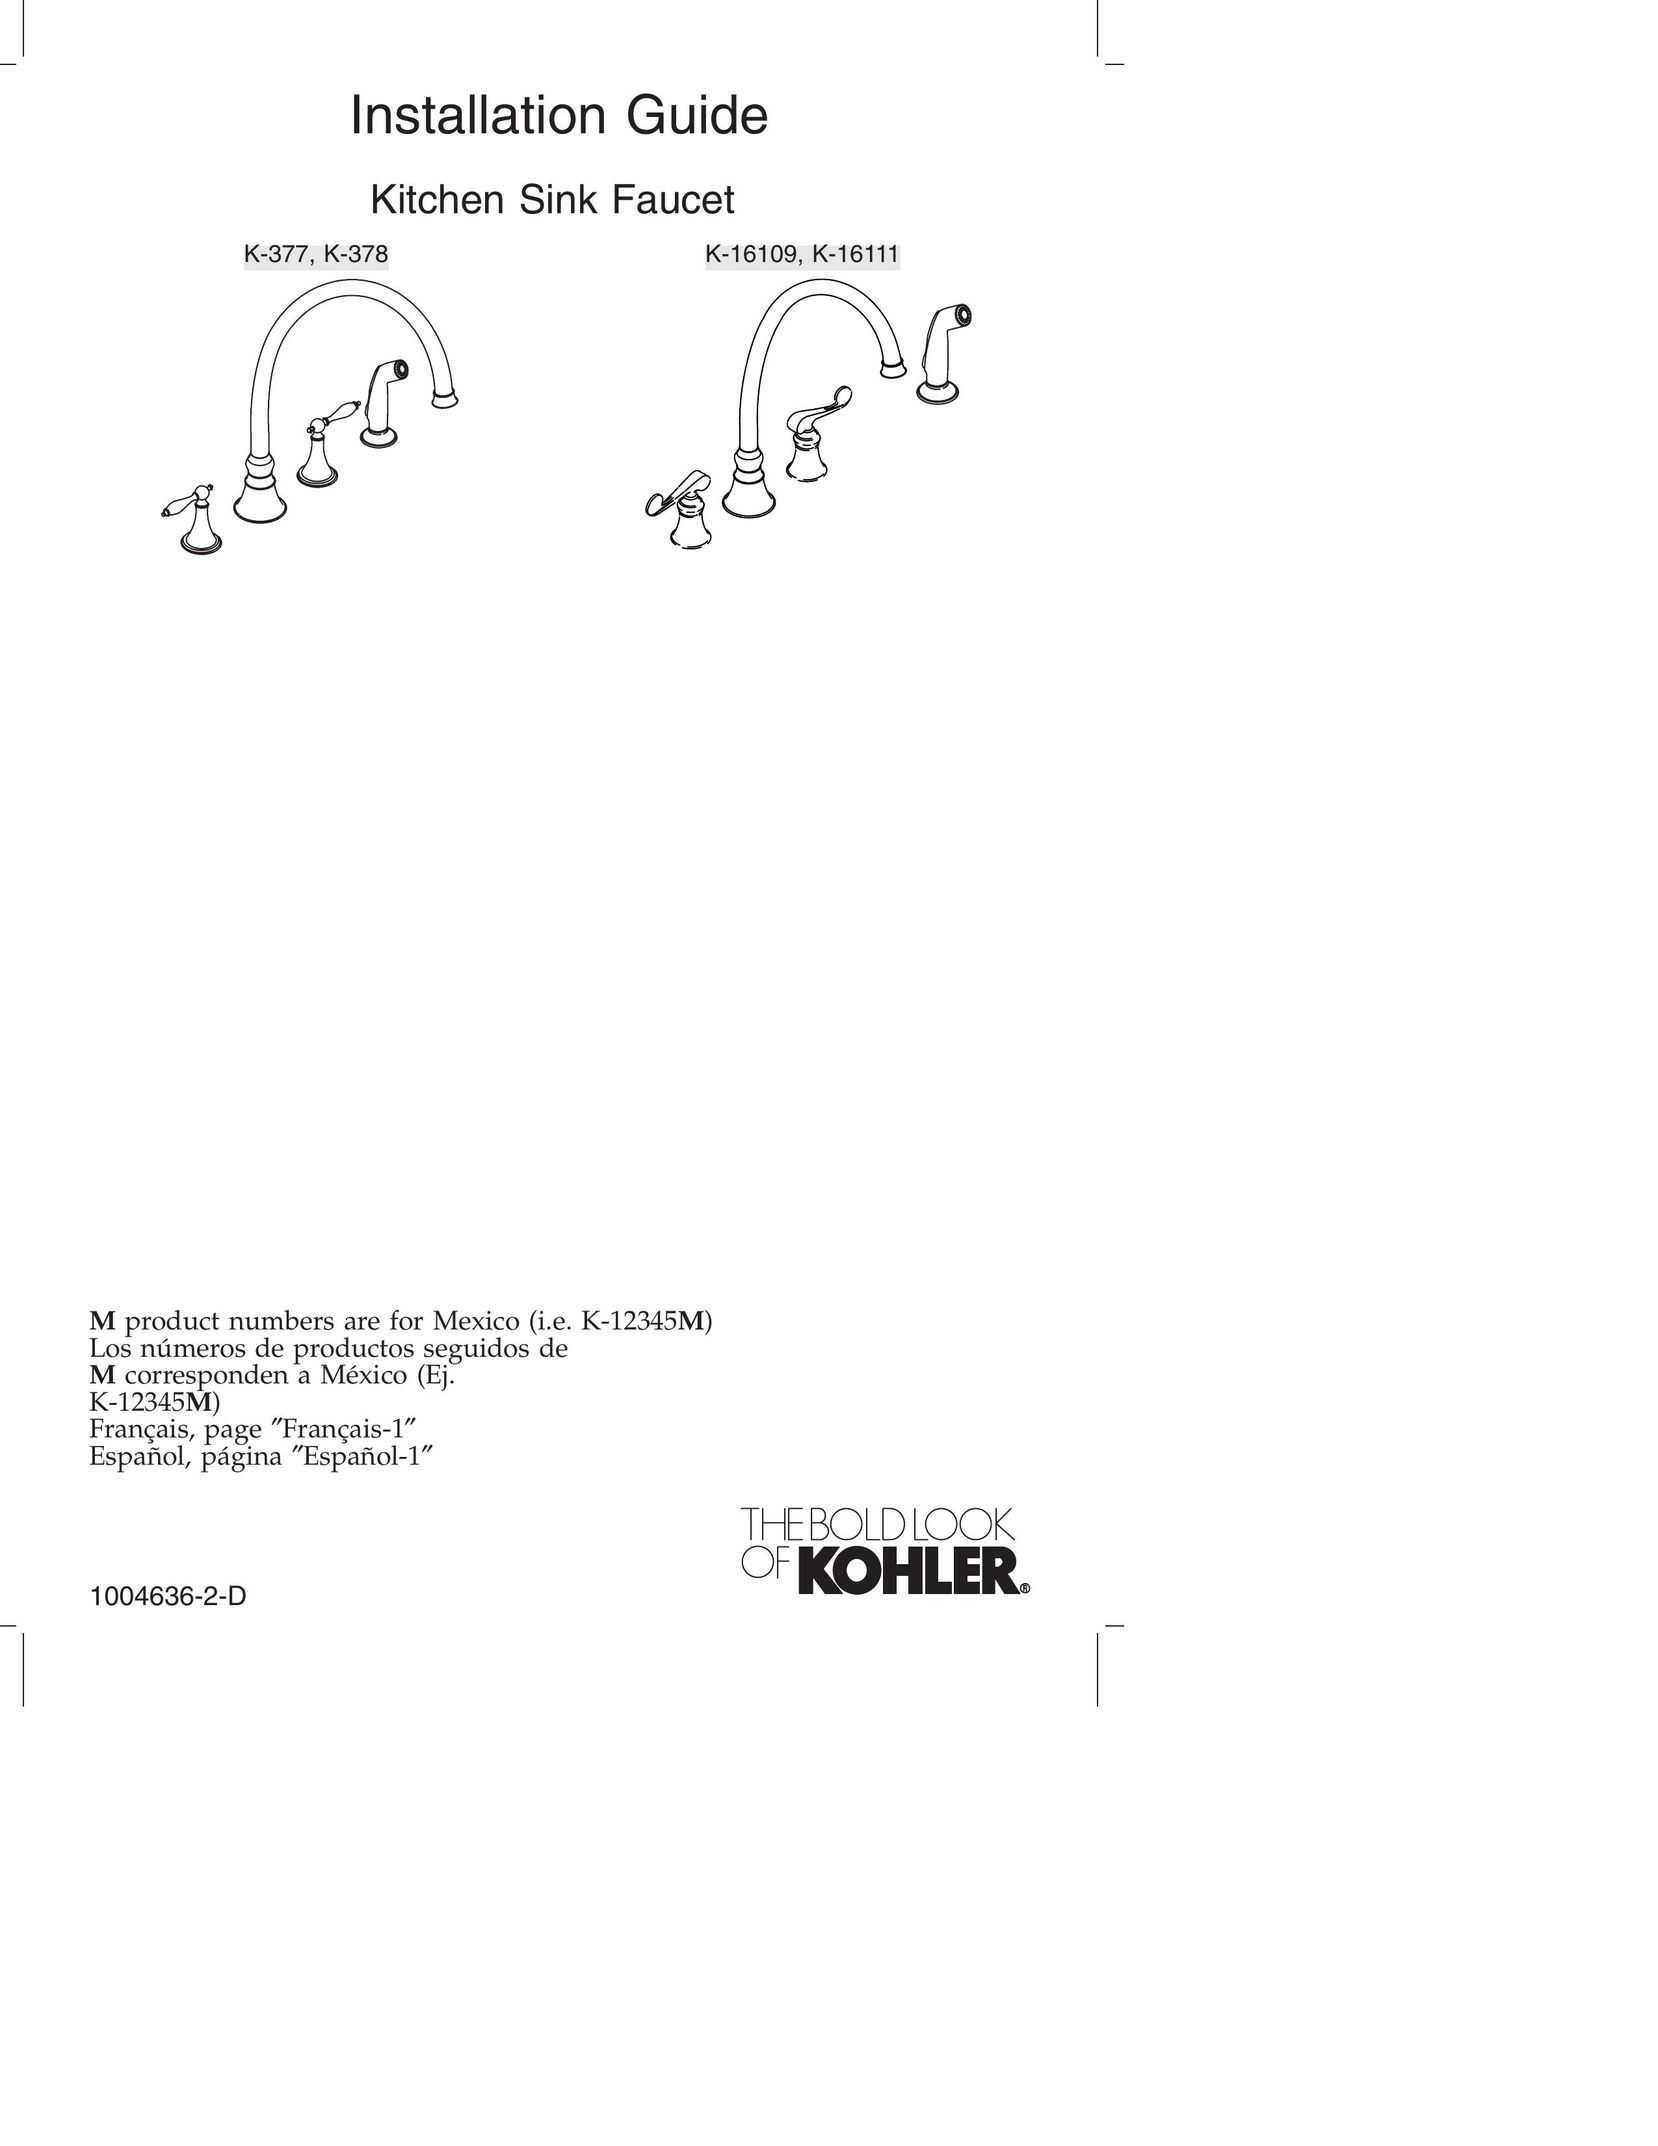 Kohler K-16109 Plumbing Product User Manual